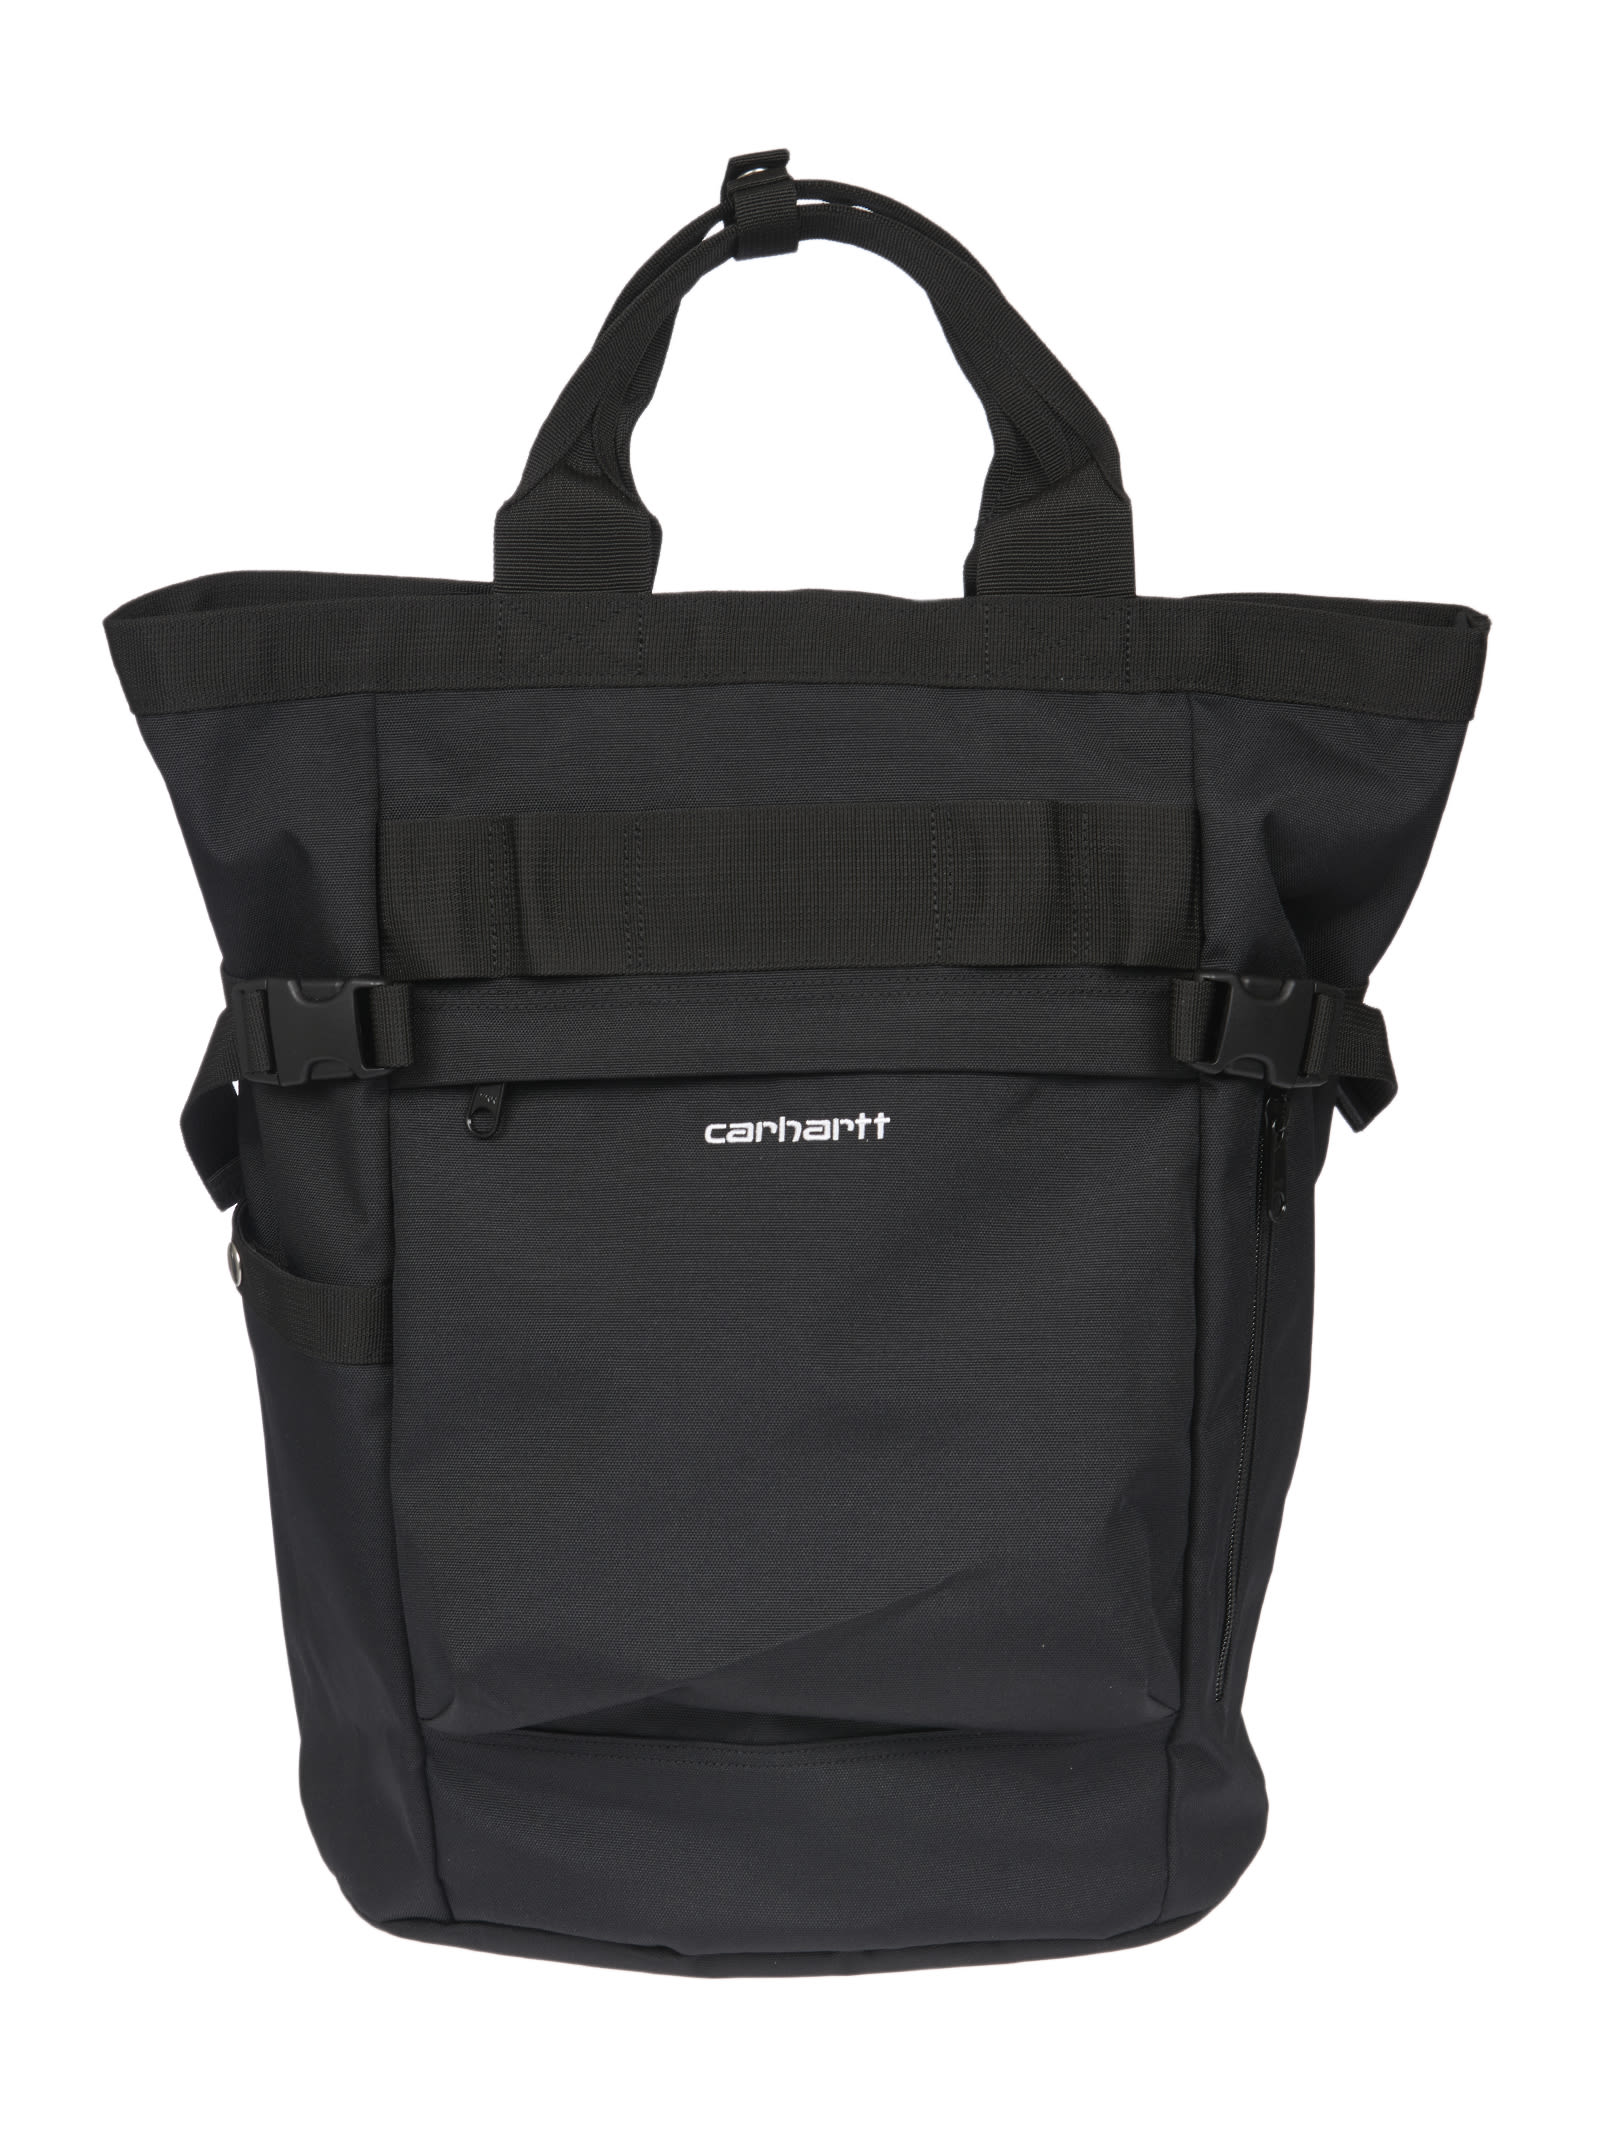 Carhartt Payton Carrier Backpack